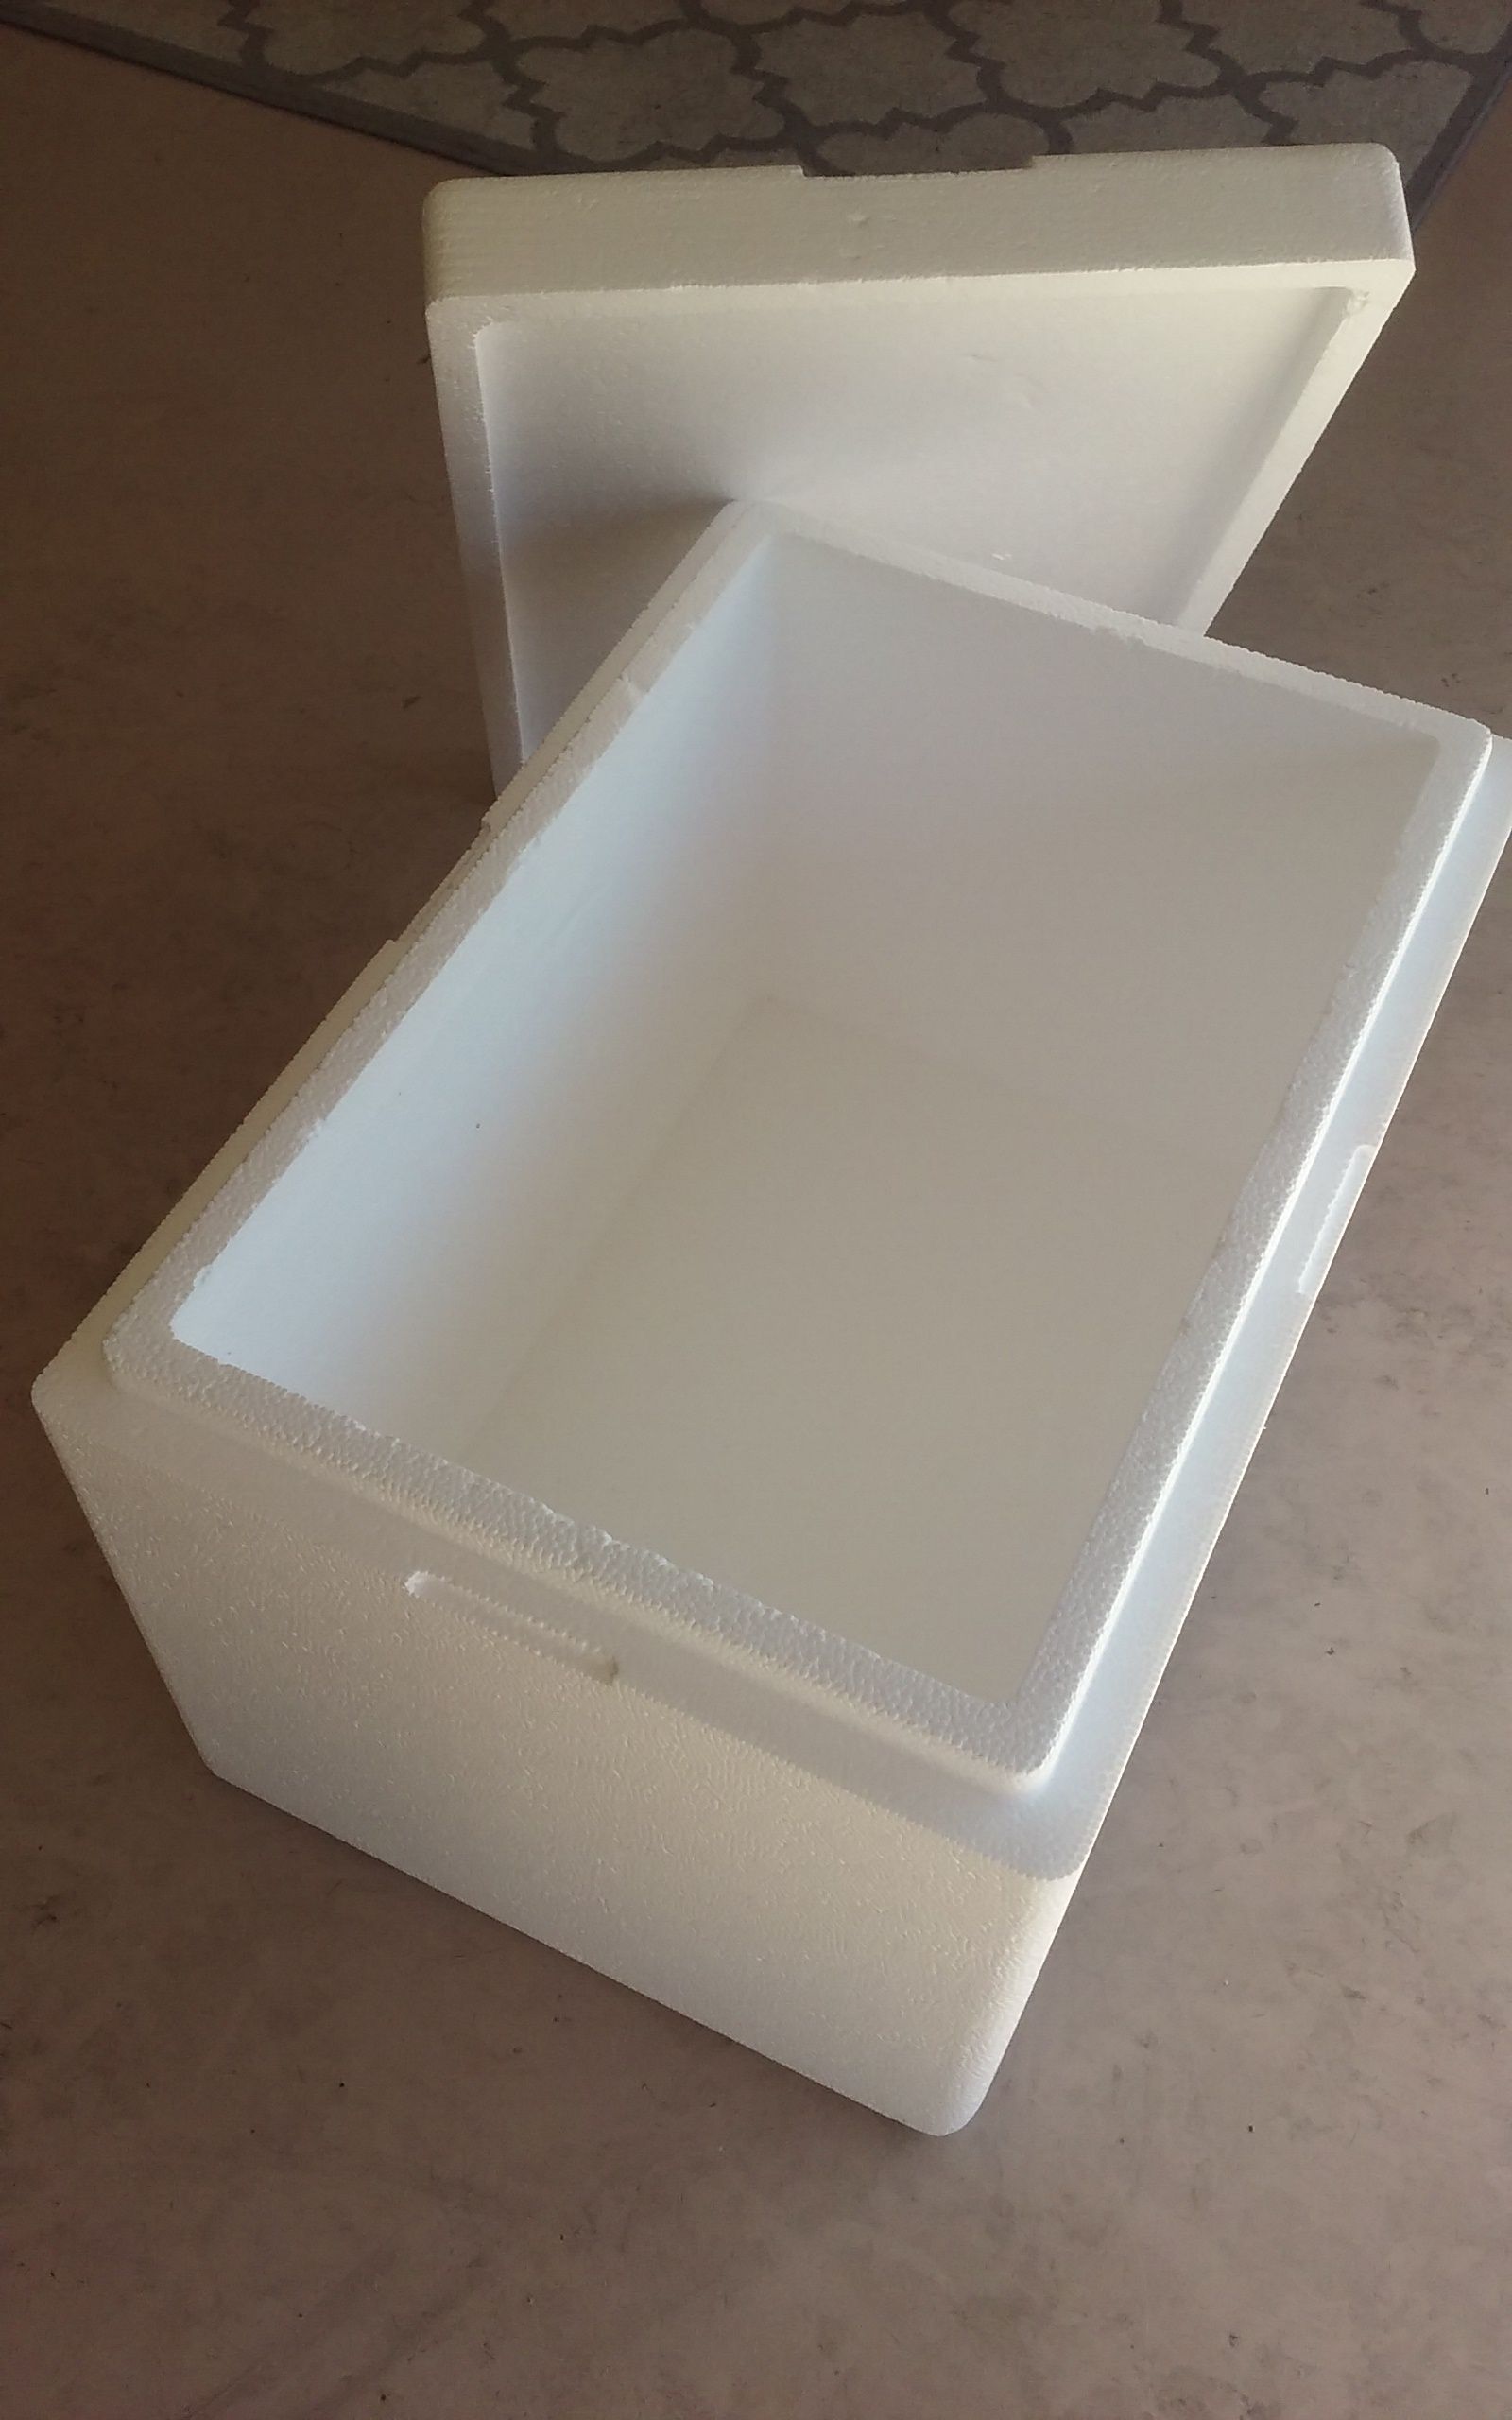 New Large Styrofoam Cooler